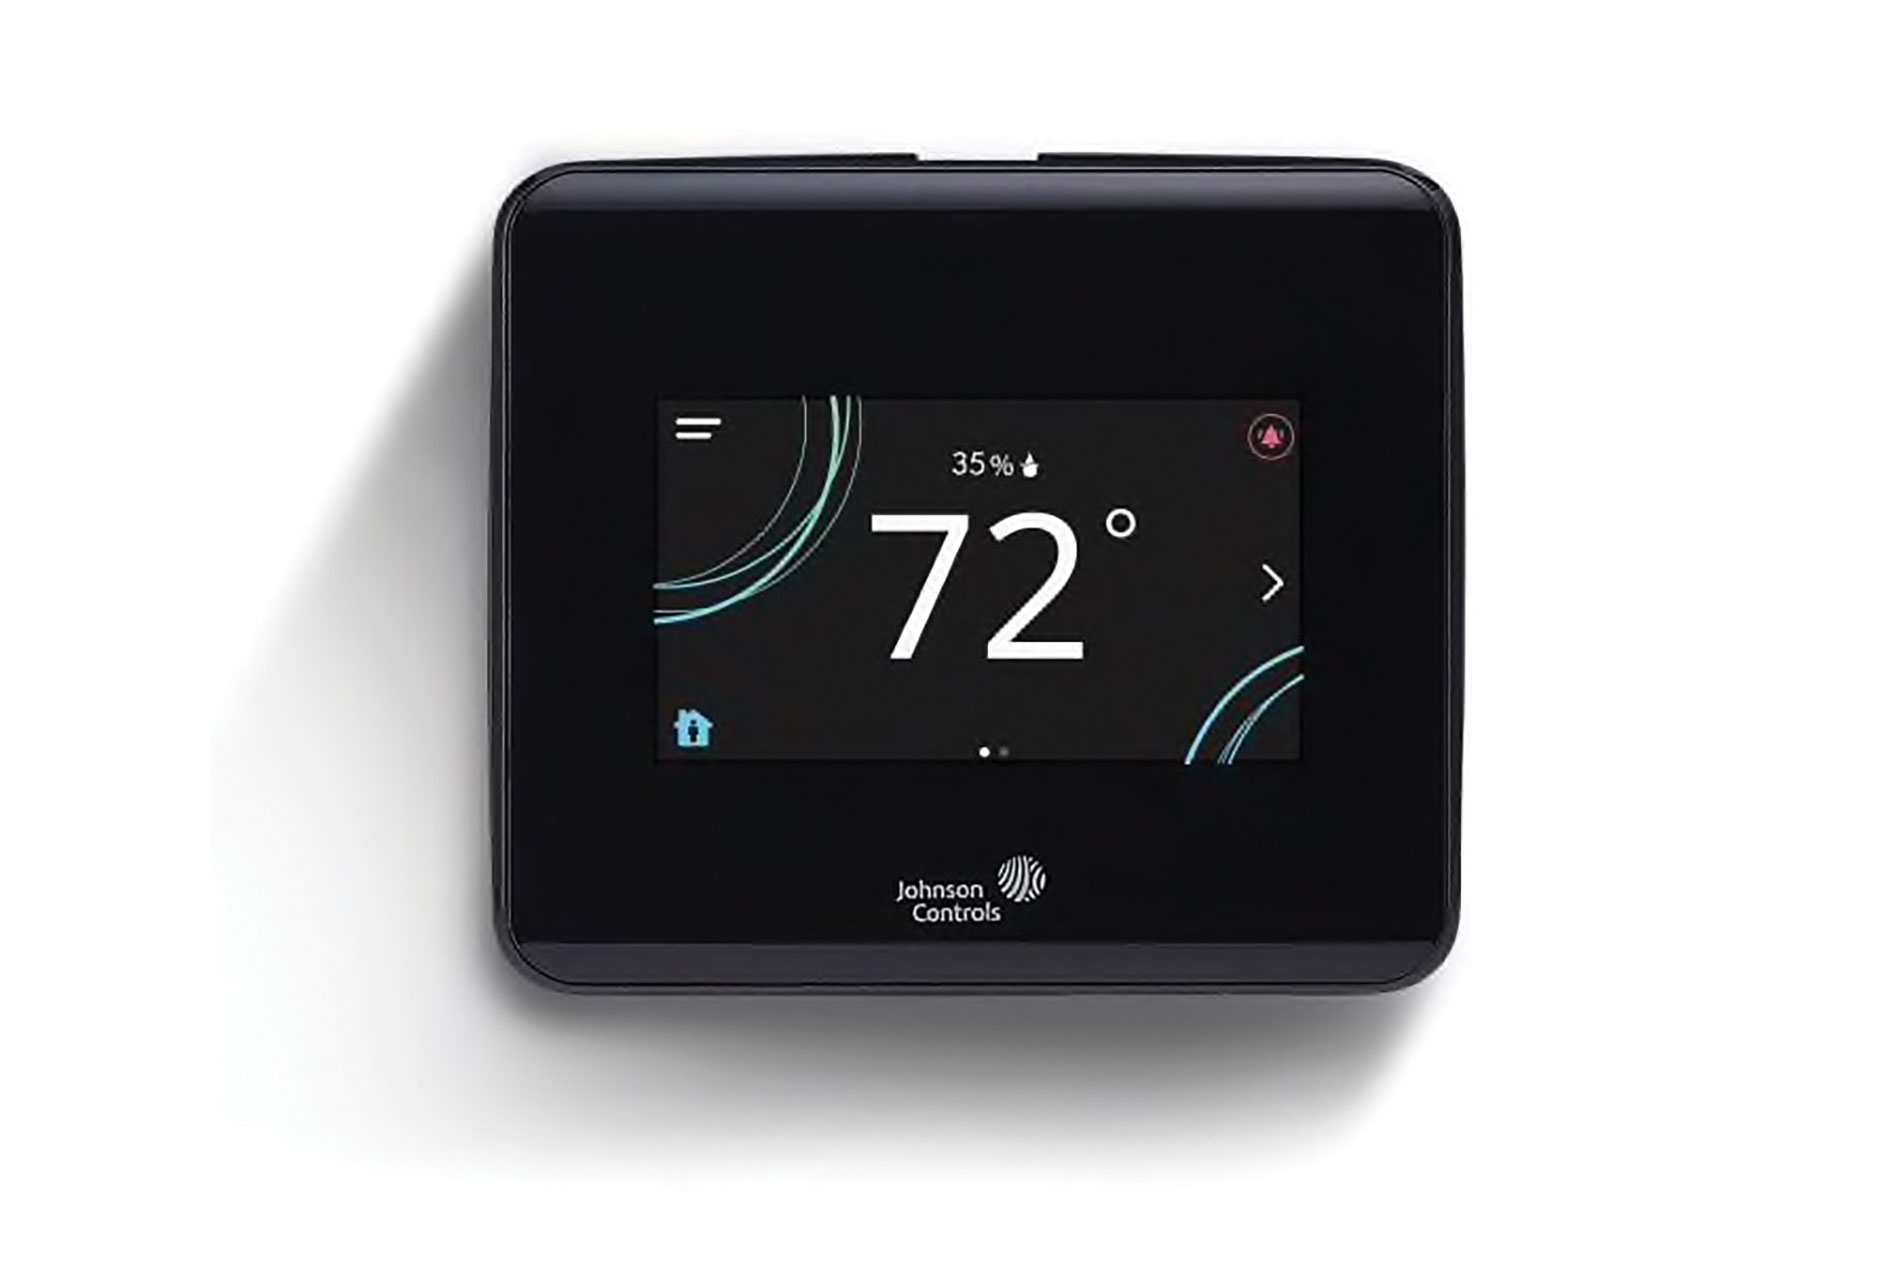 Johnson Controls’ TEC3000 series smart thermostat